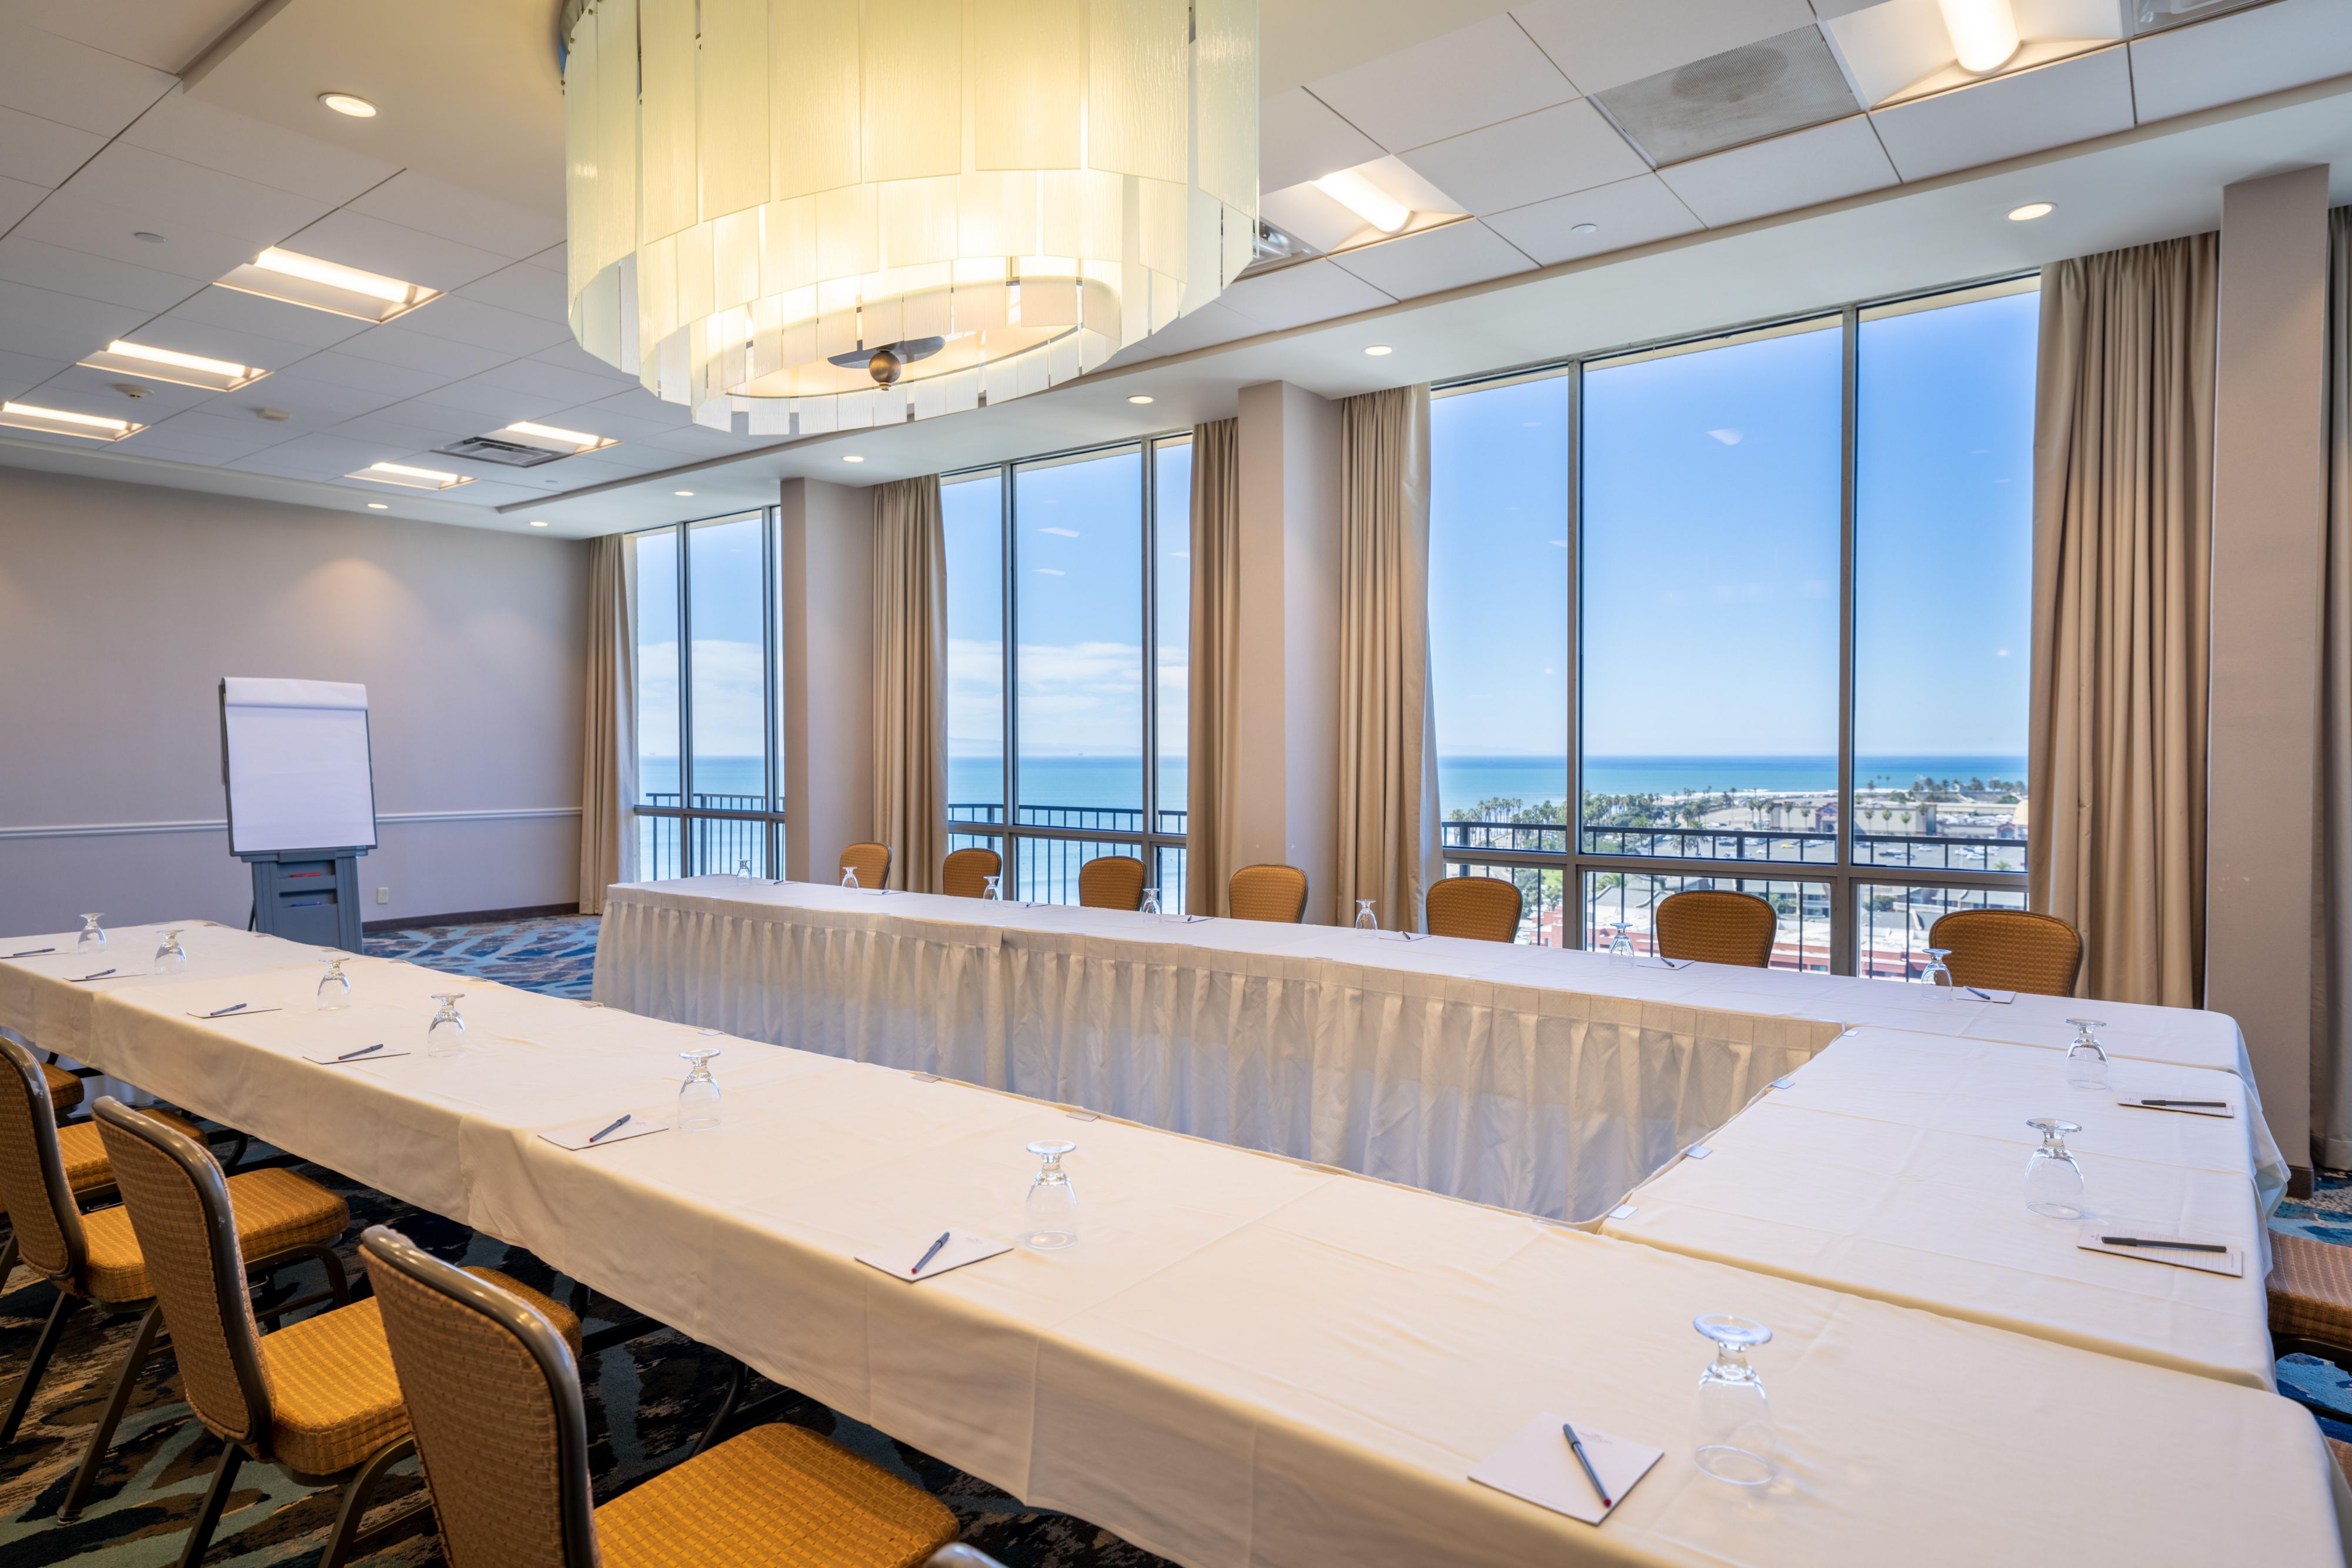 Bay View room, an ocean view meeting room